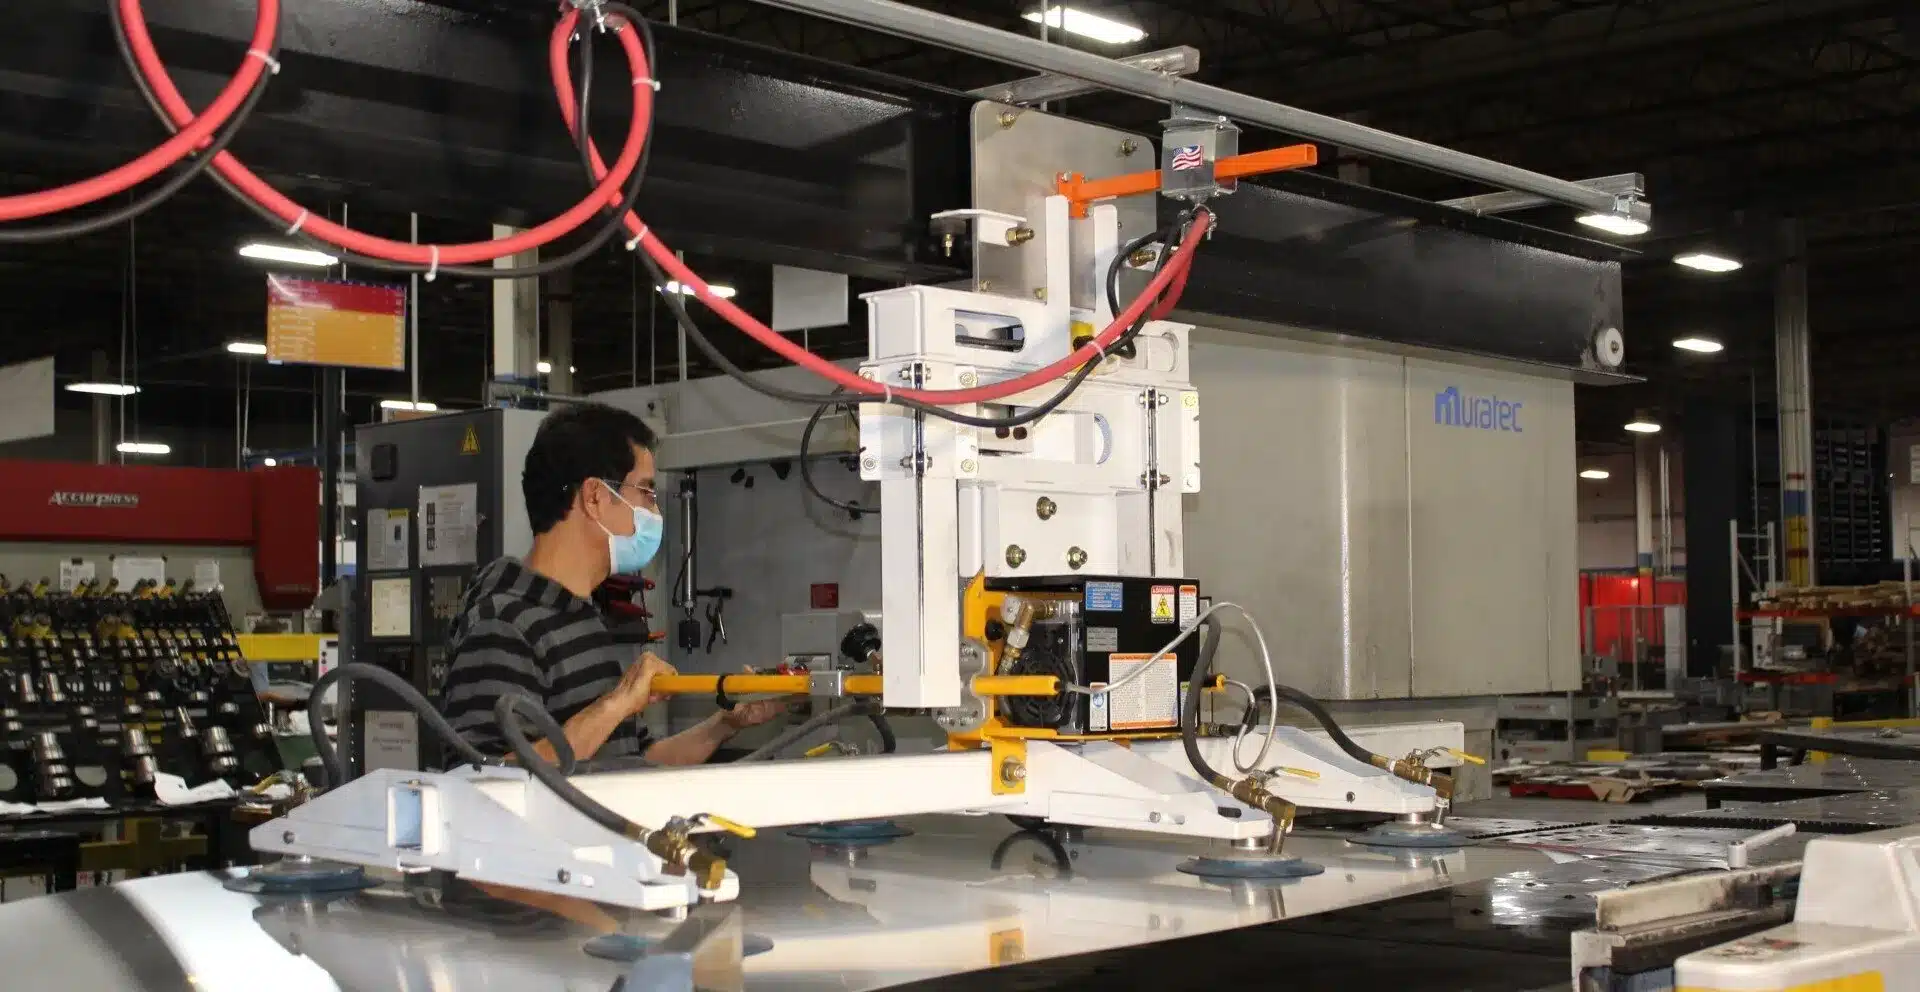 Laser Craft Tech Tech Employee uses a machine in a shop